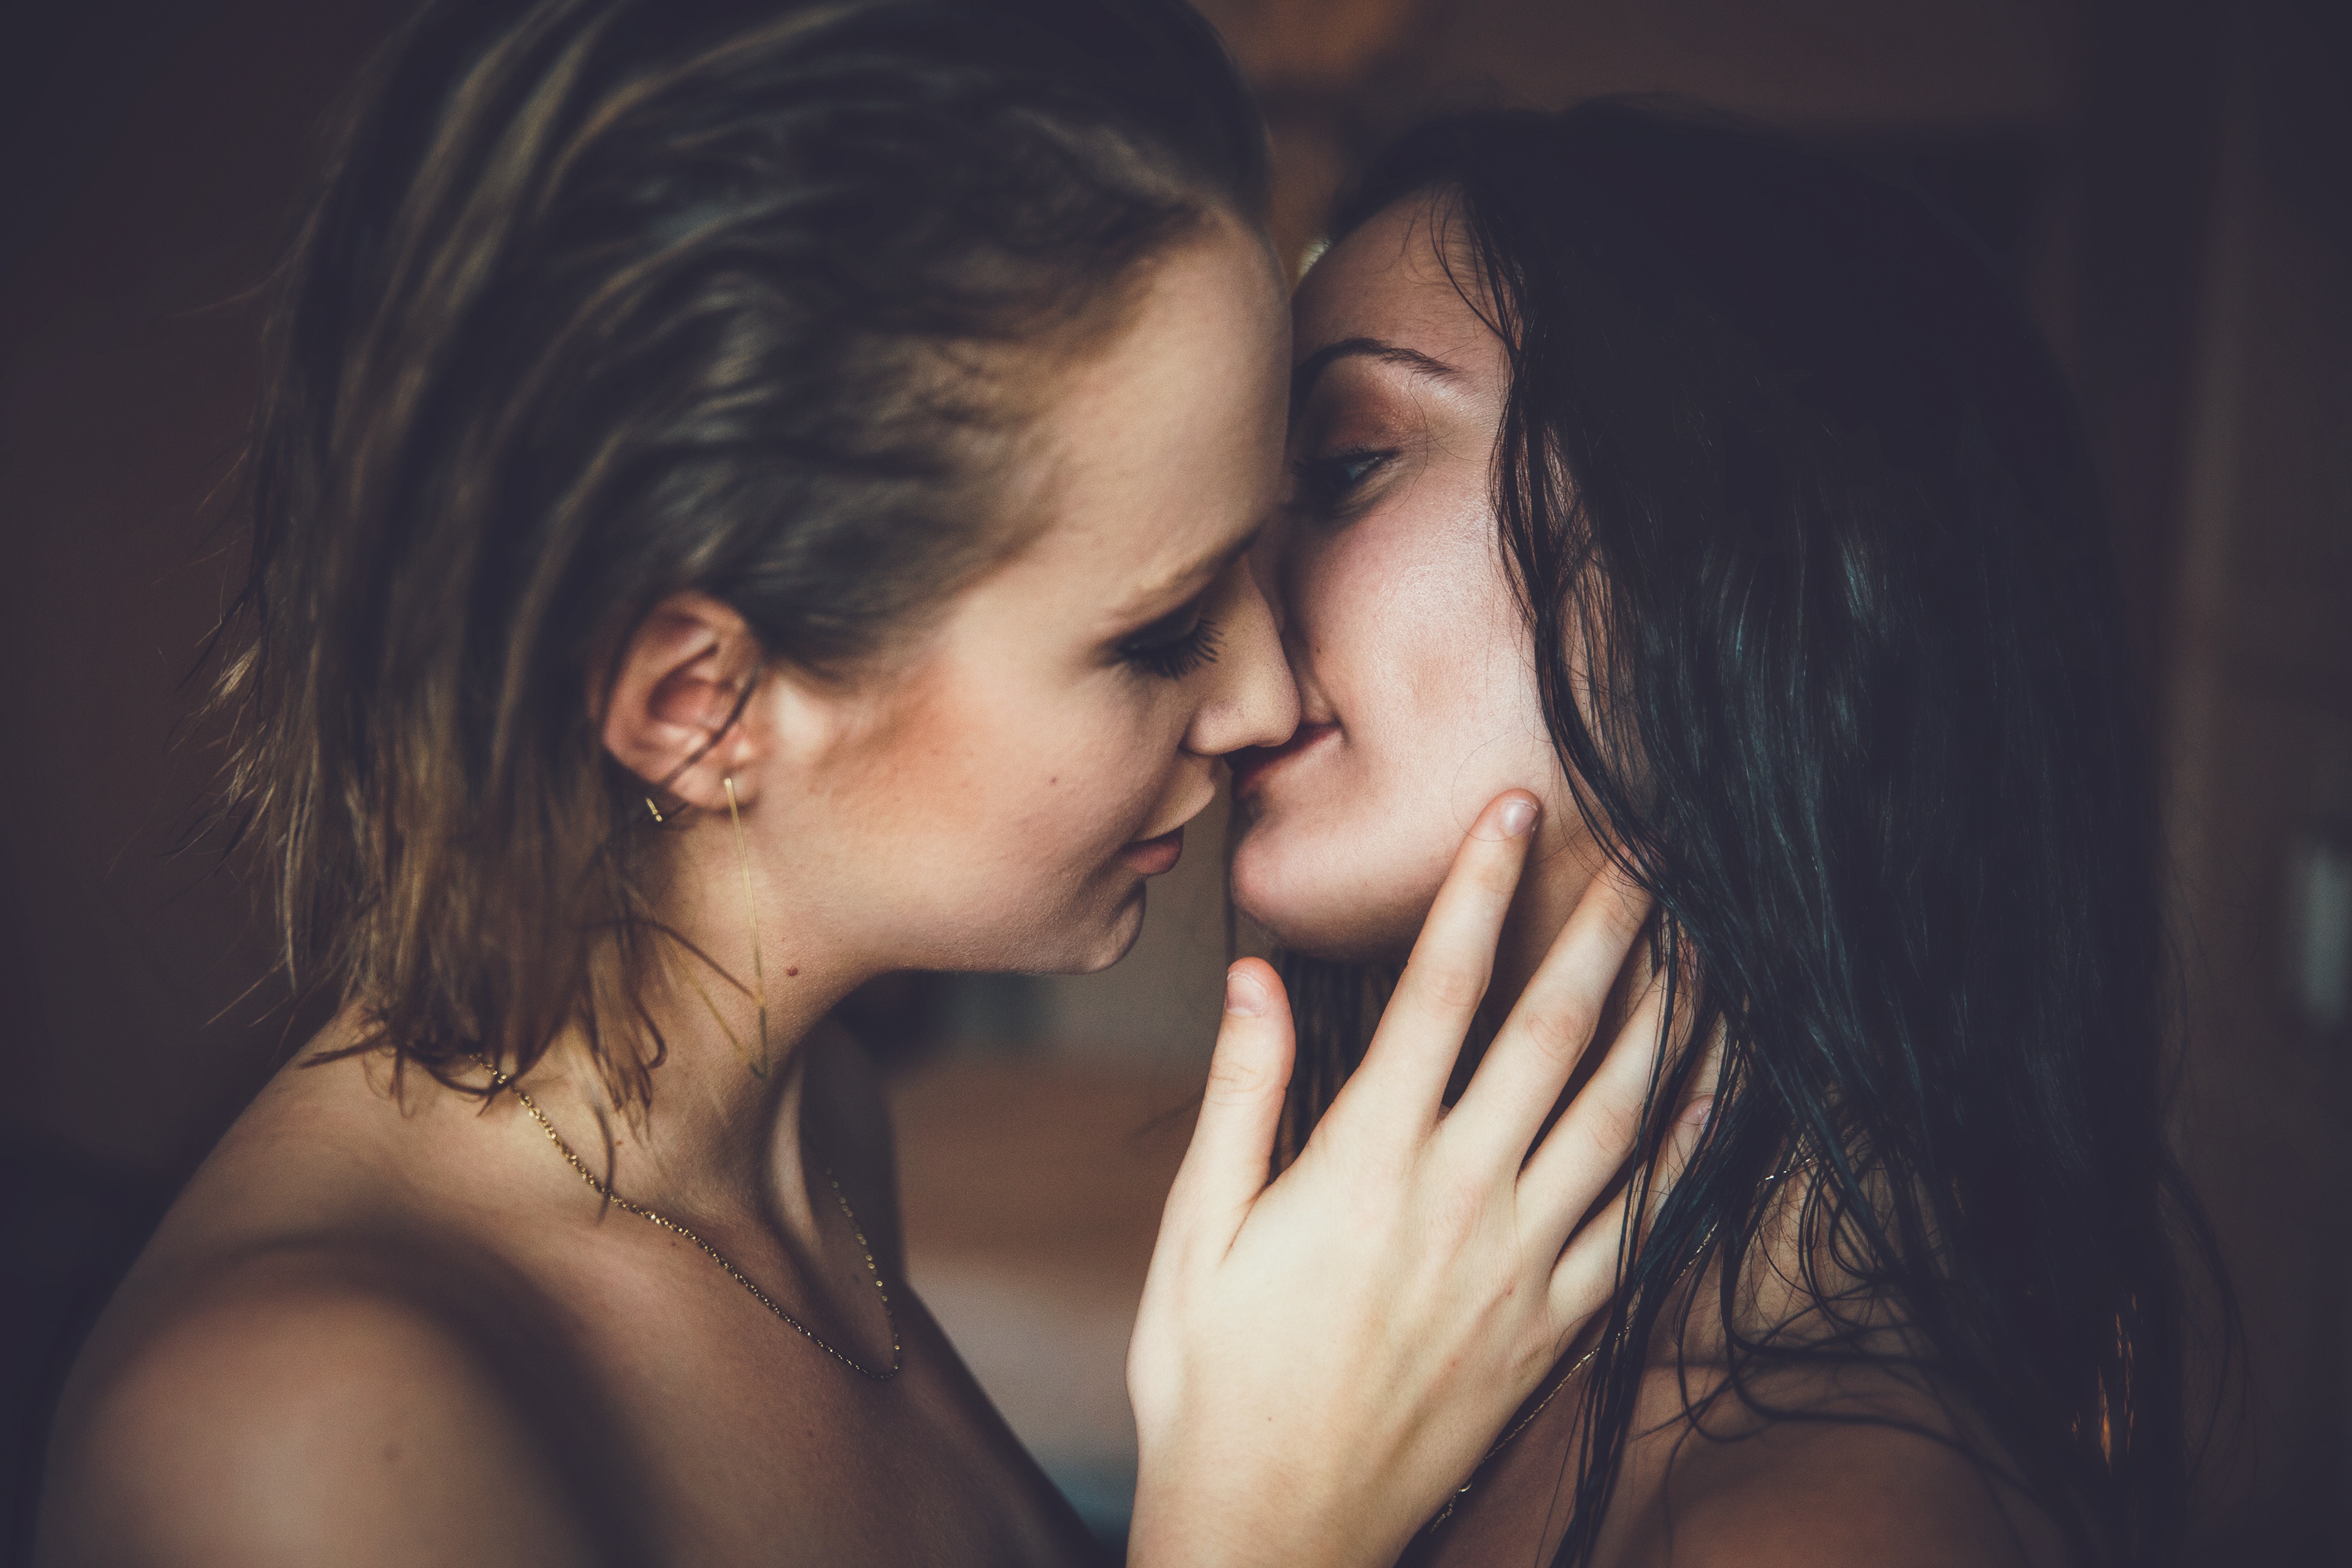 Lesbians 2016. Барбара Палвин лесбийский поцелуй. Две девушки любовь. Поцелуй девушек. Фотосессия двух девушек.